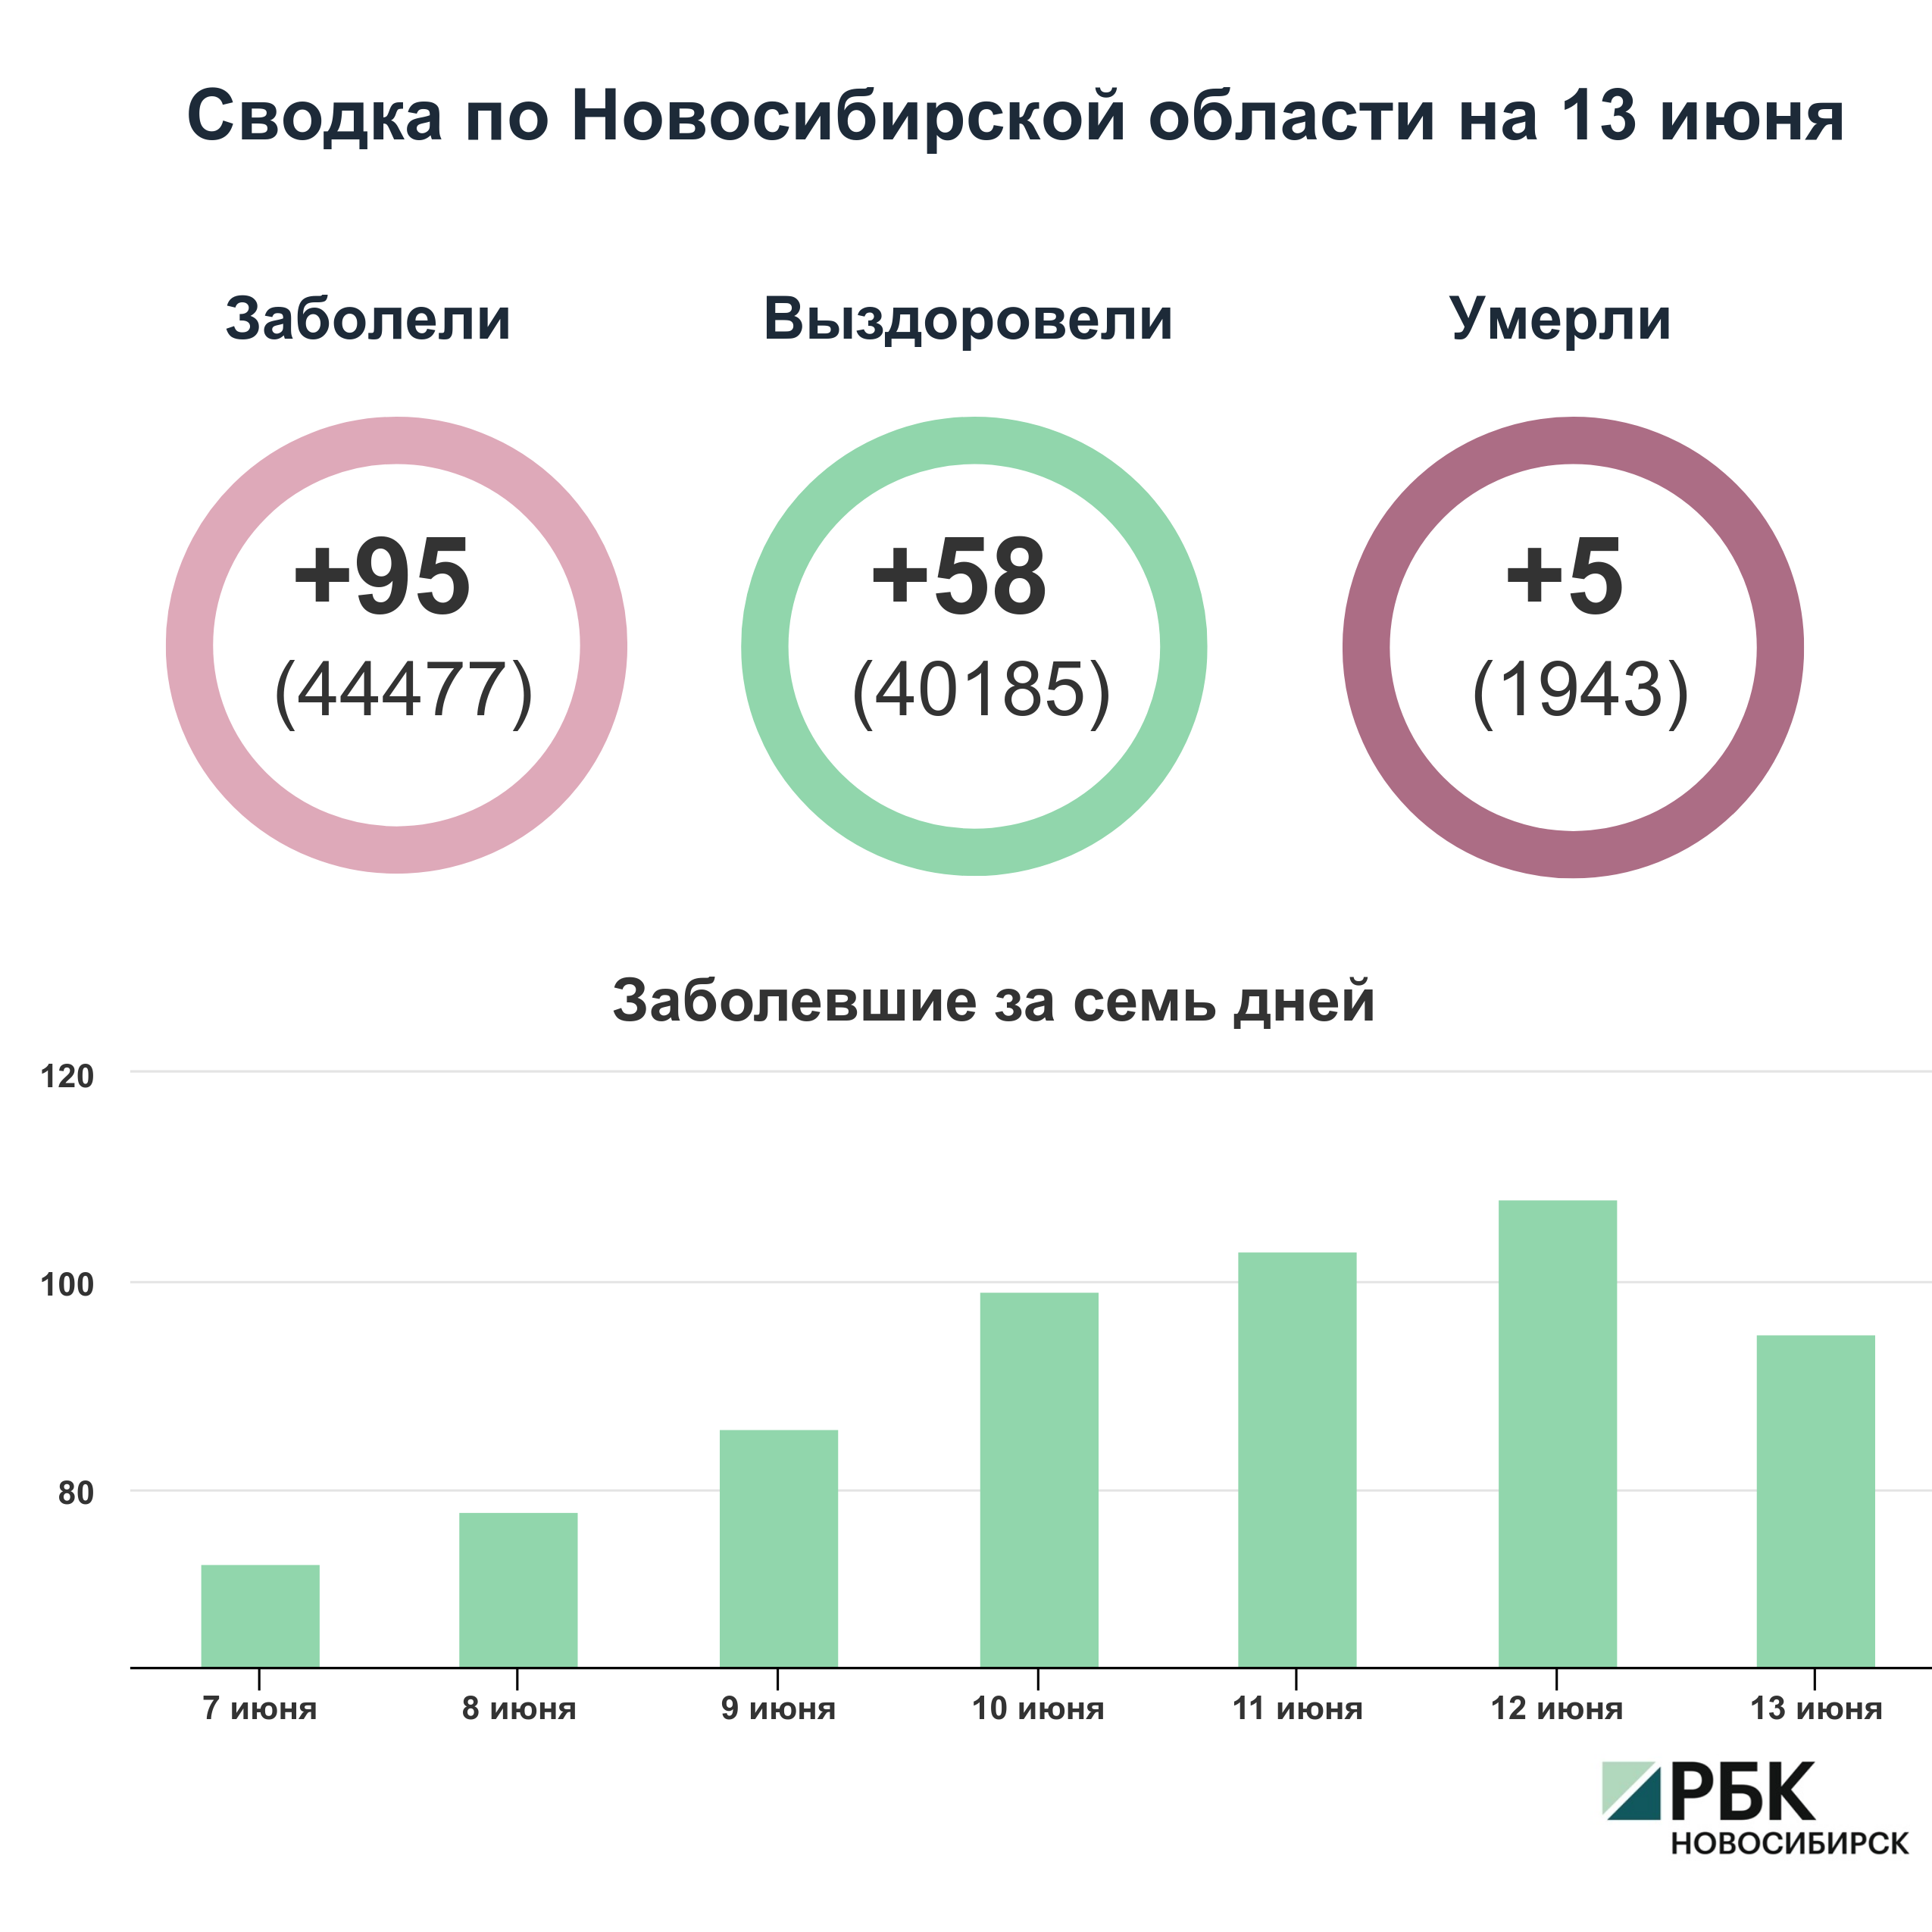 Коронавирус в Новосибирске: сводка на 13 июня